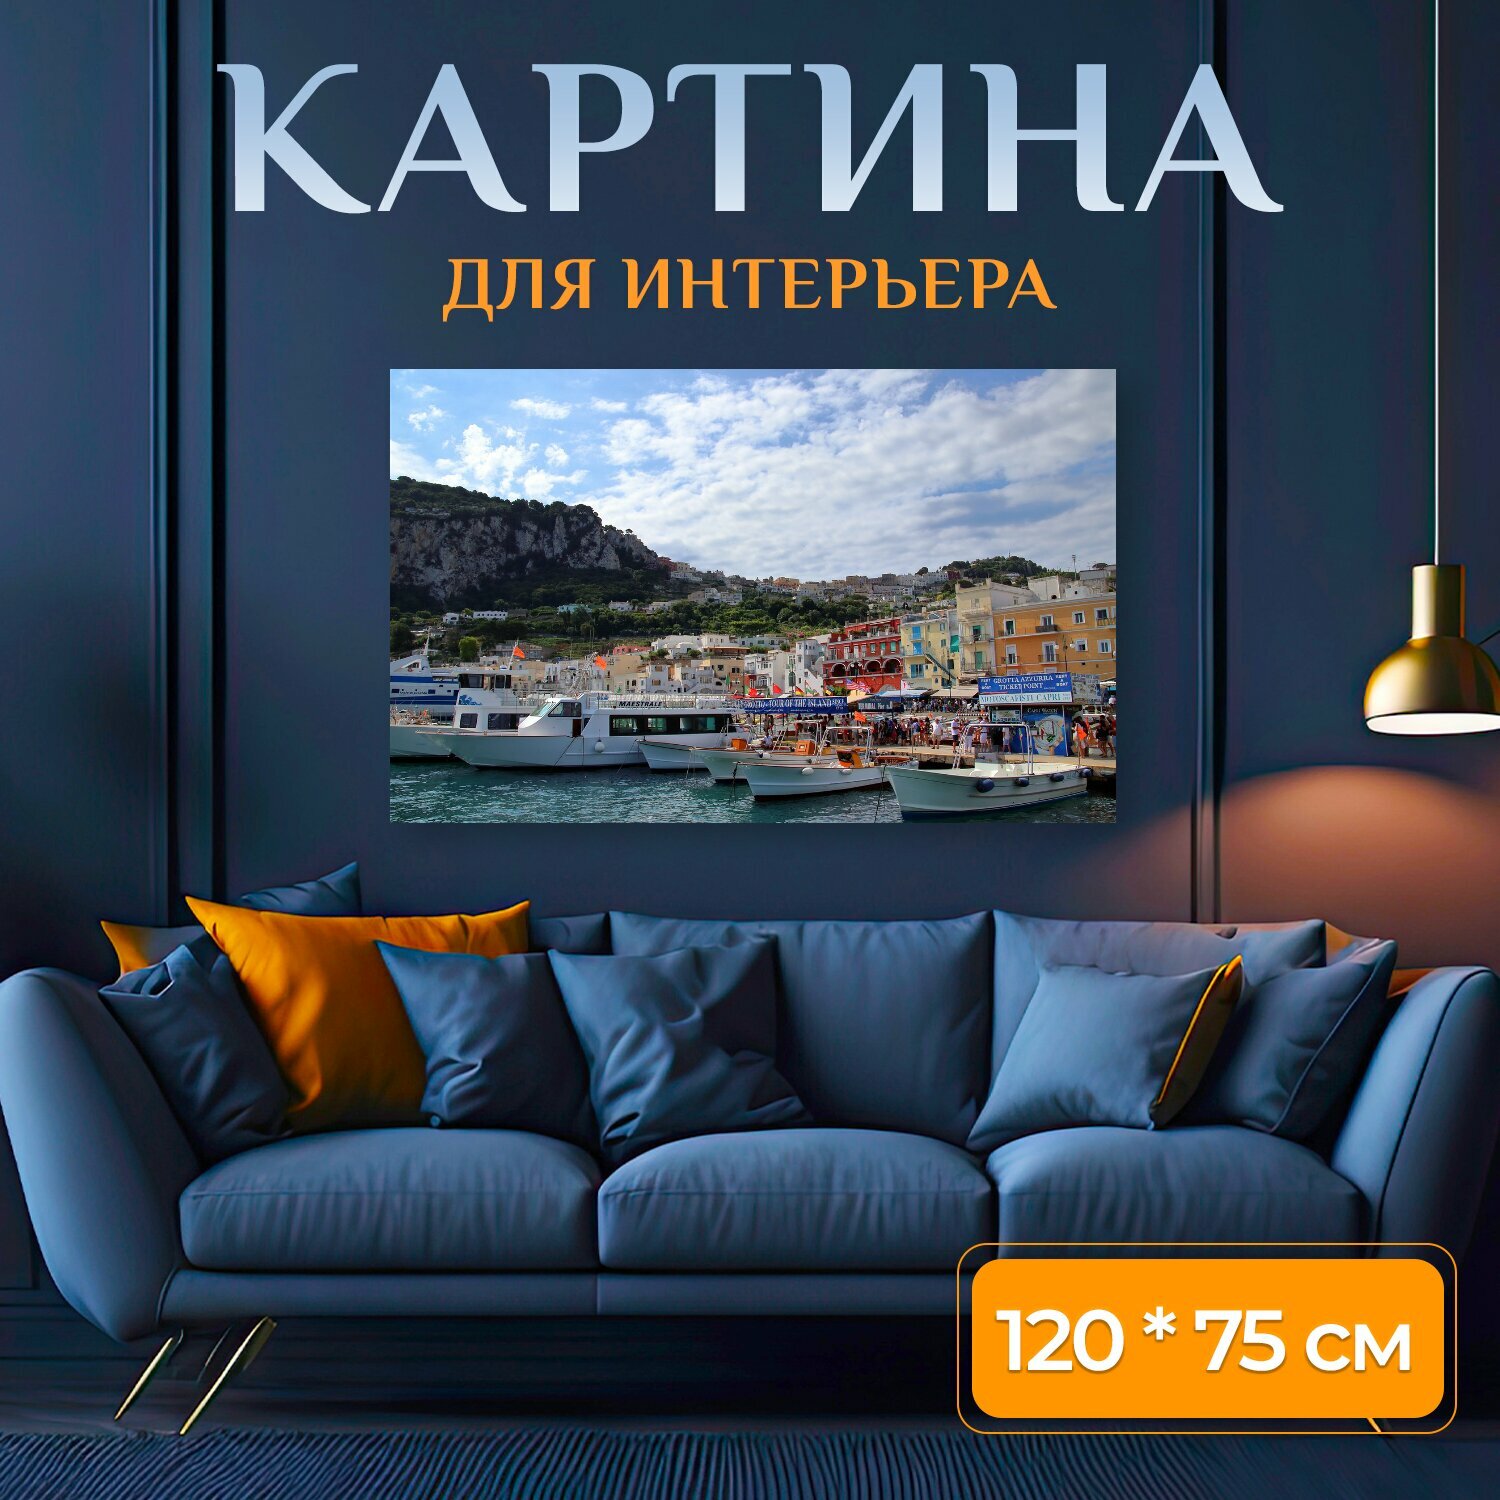 Картина на холсте "Капри, марина гранди, италия" на подрамнике 120х75 см. для интерьера